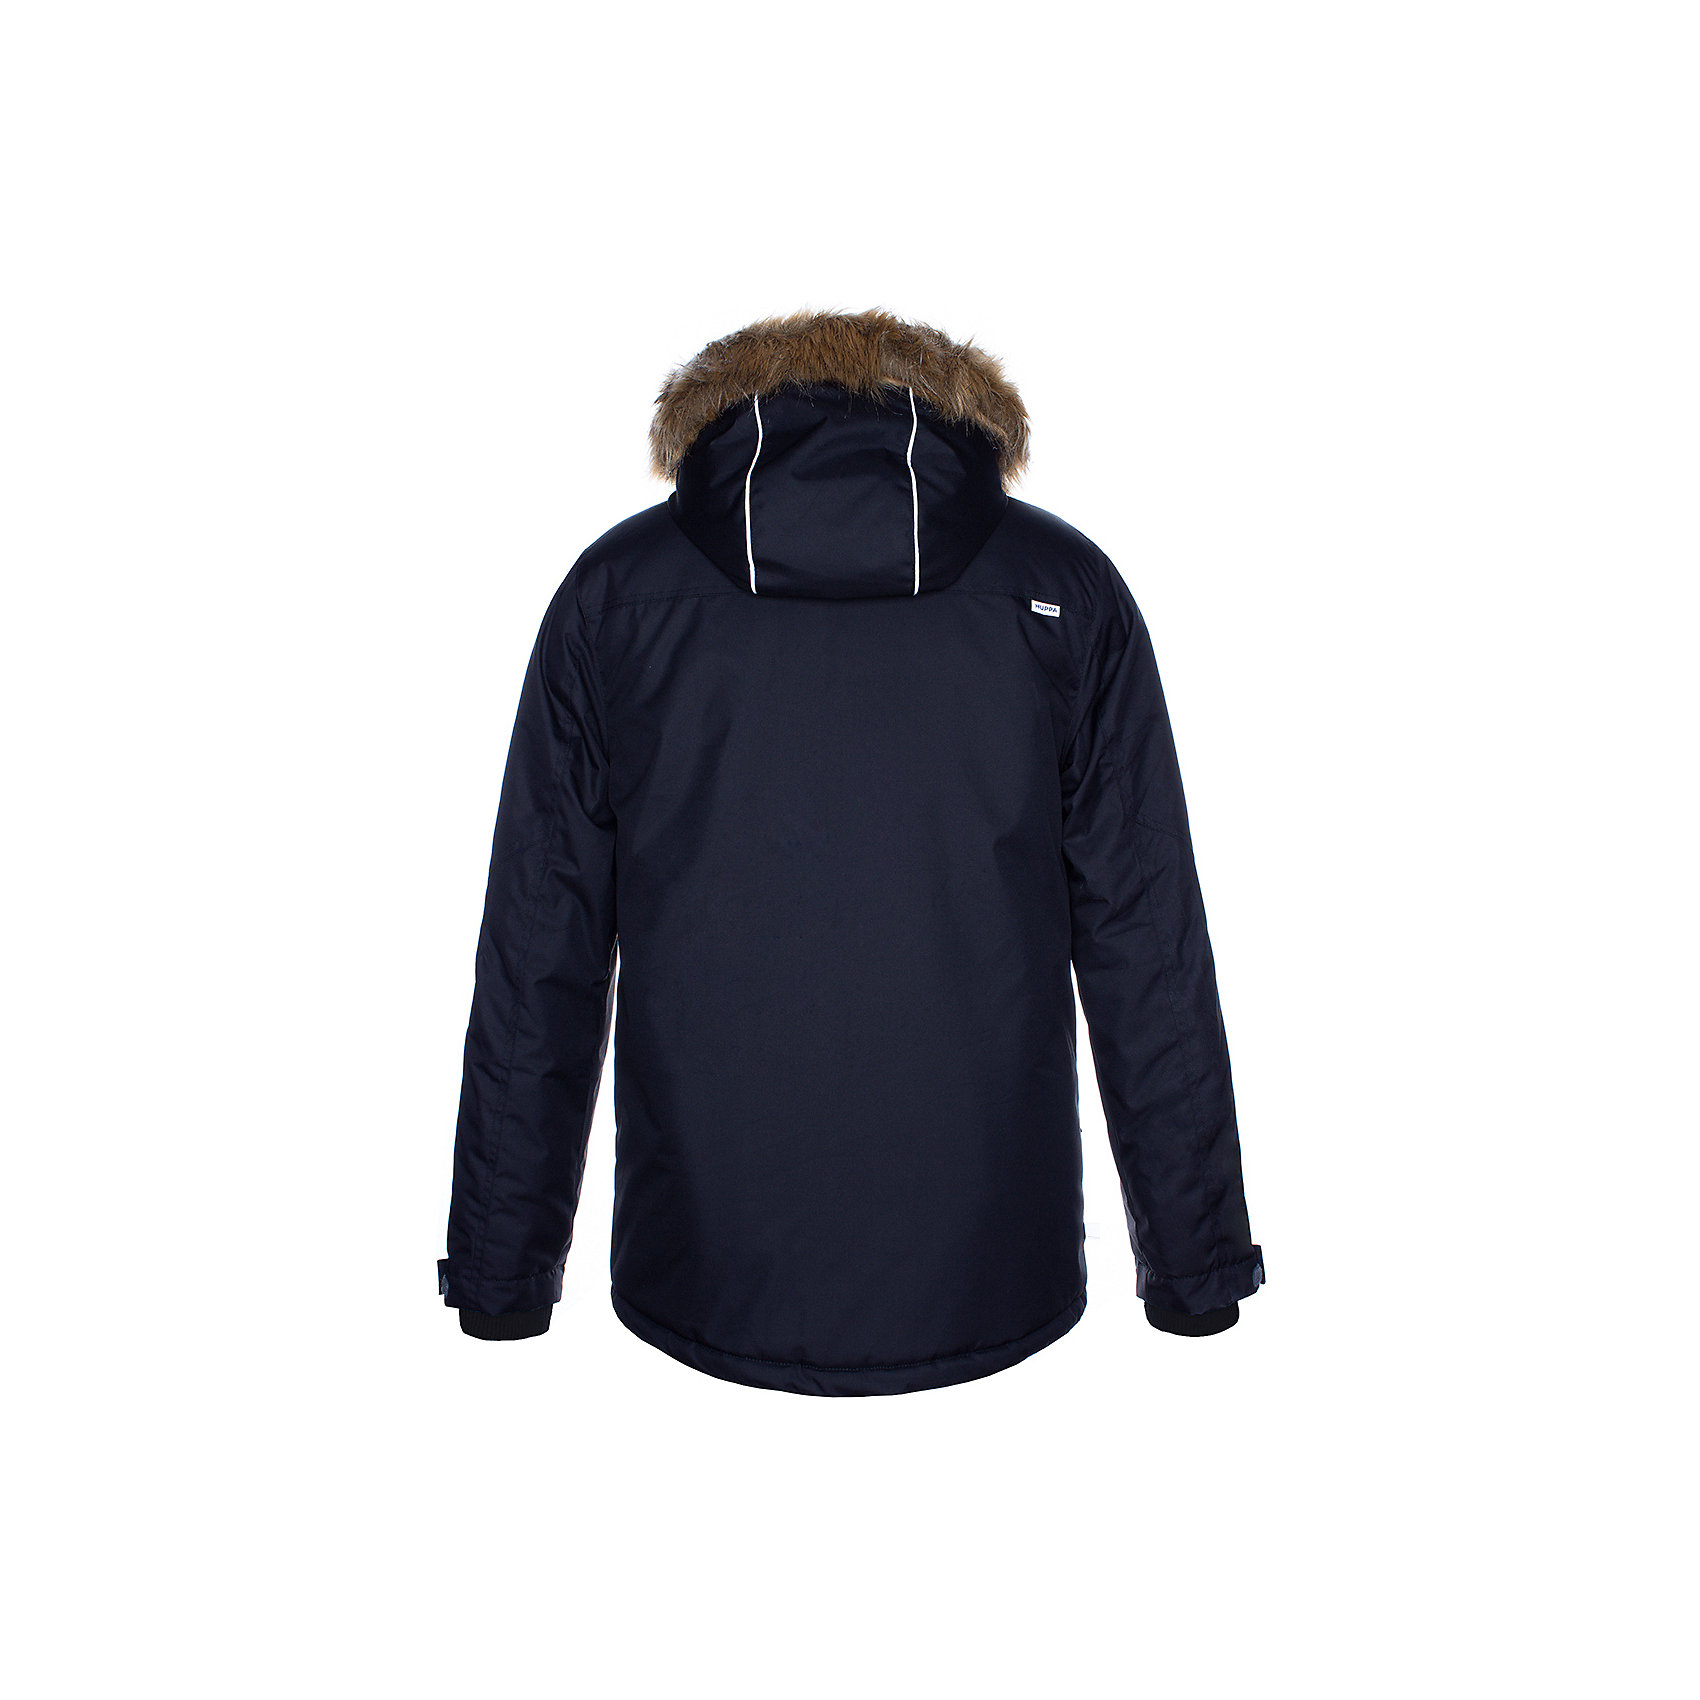 Утеплённая куртка Marten 1 HUPPA 12281517